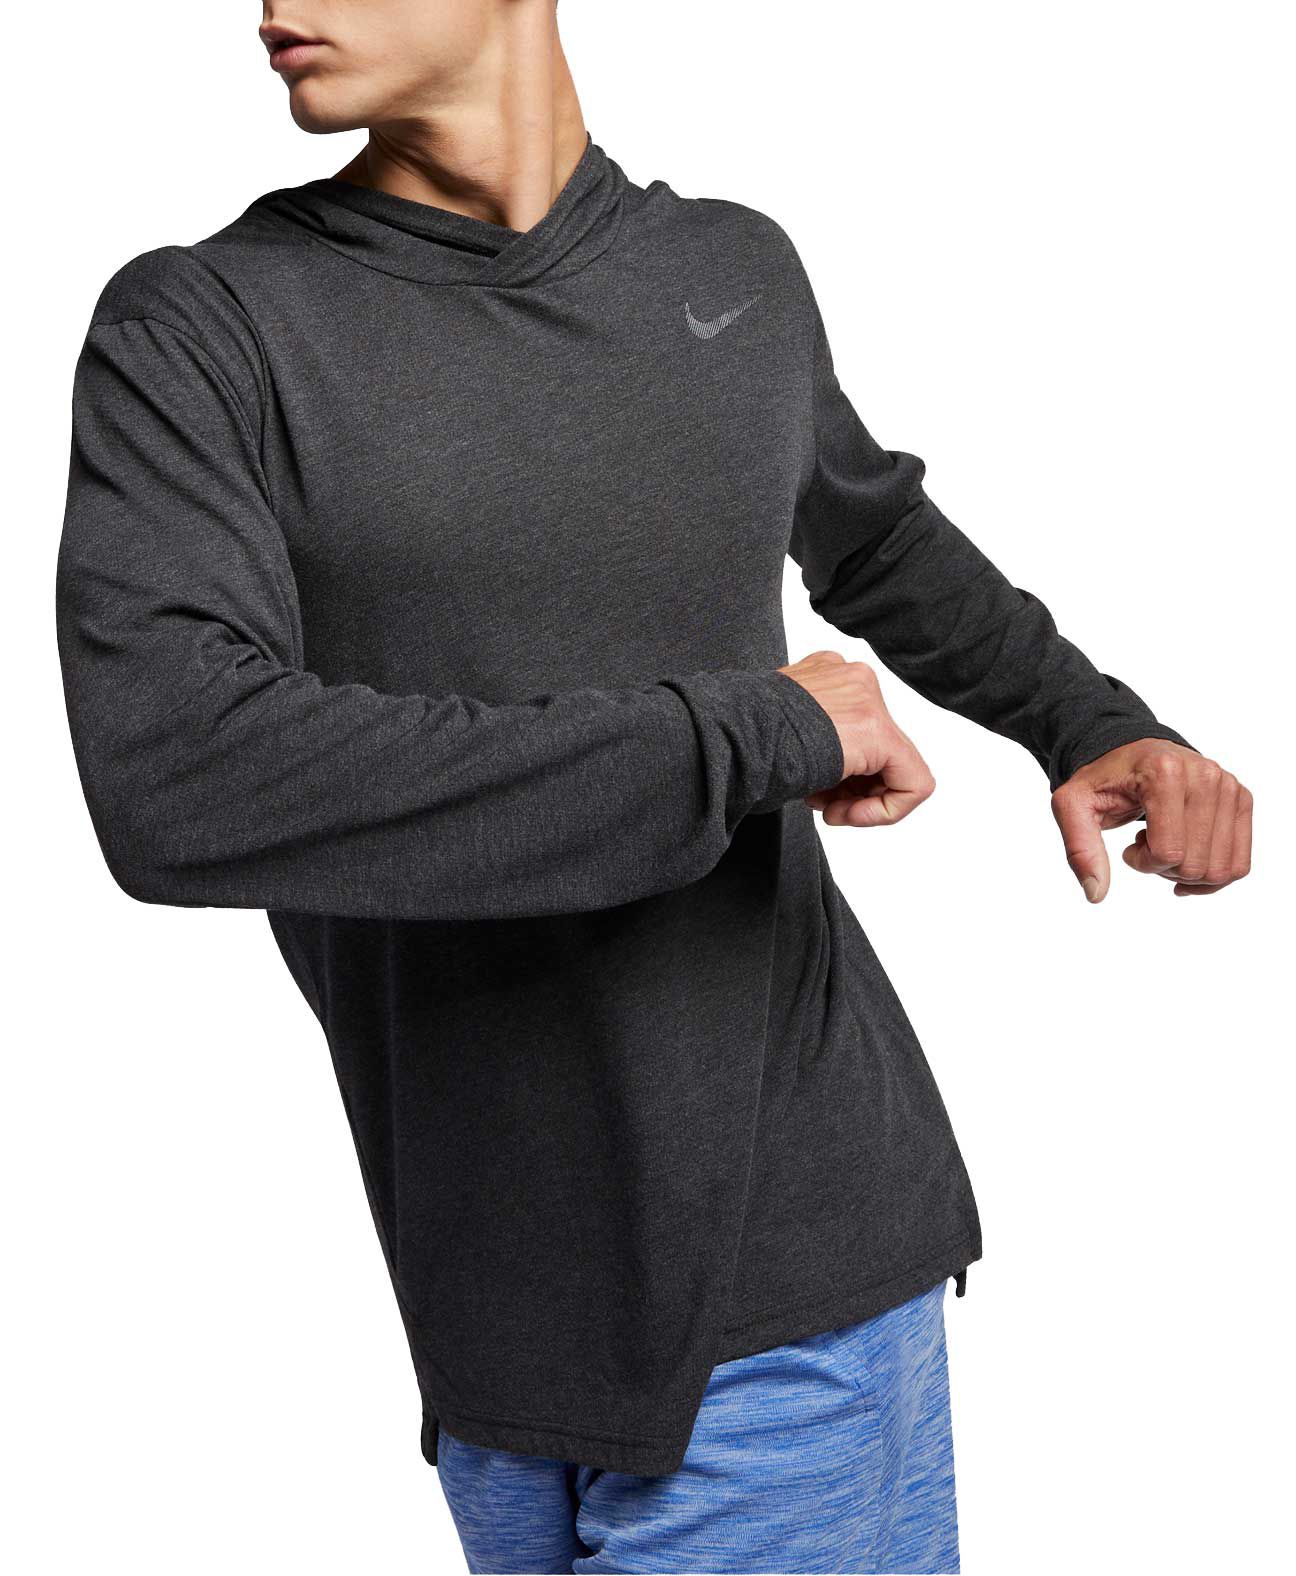 Nike Men's Hyper Dry Hooded Long Sleeve Shirt (Regular and Big & Tall) - .97 - .97